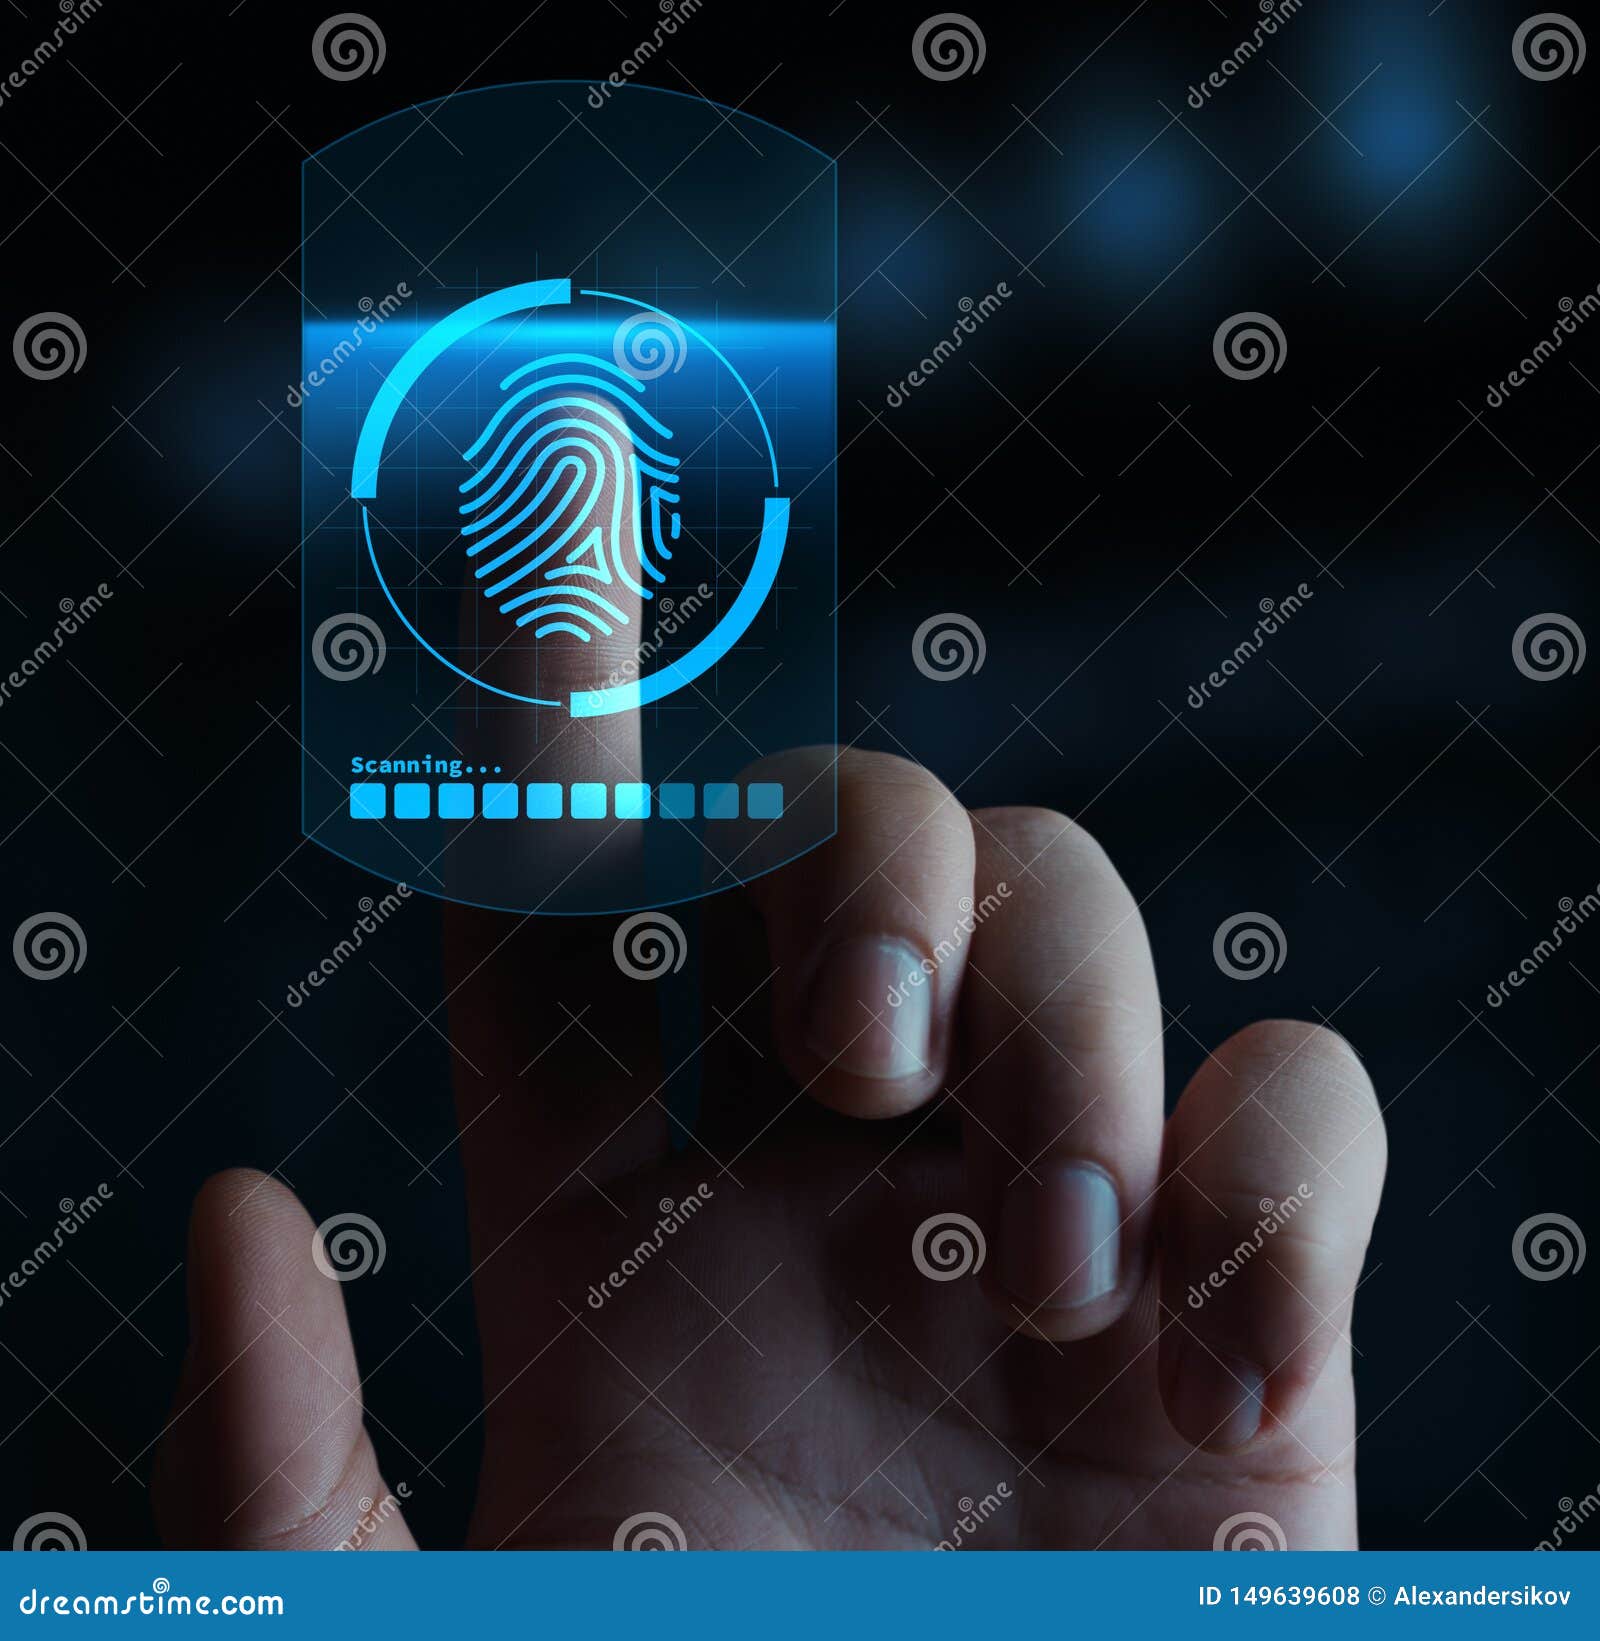 fingerprint scan security access with biometrics identification